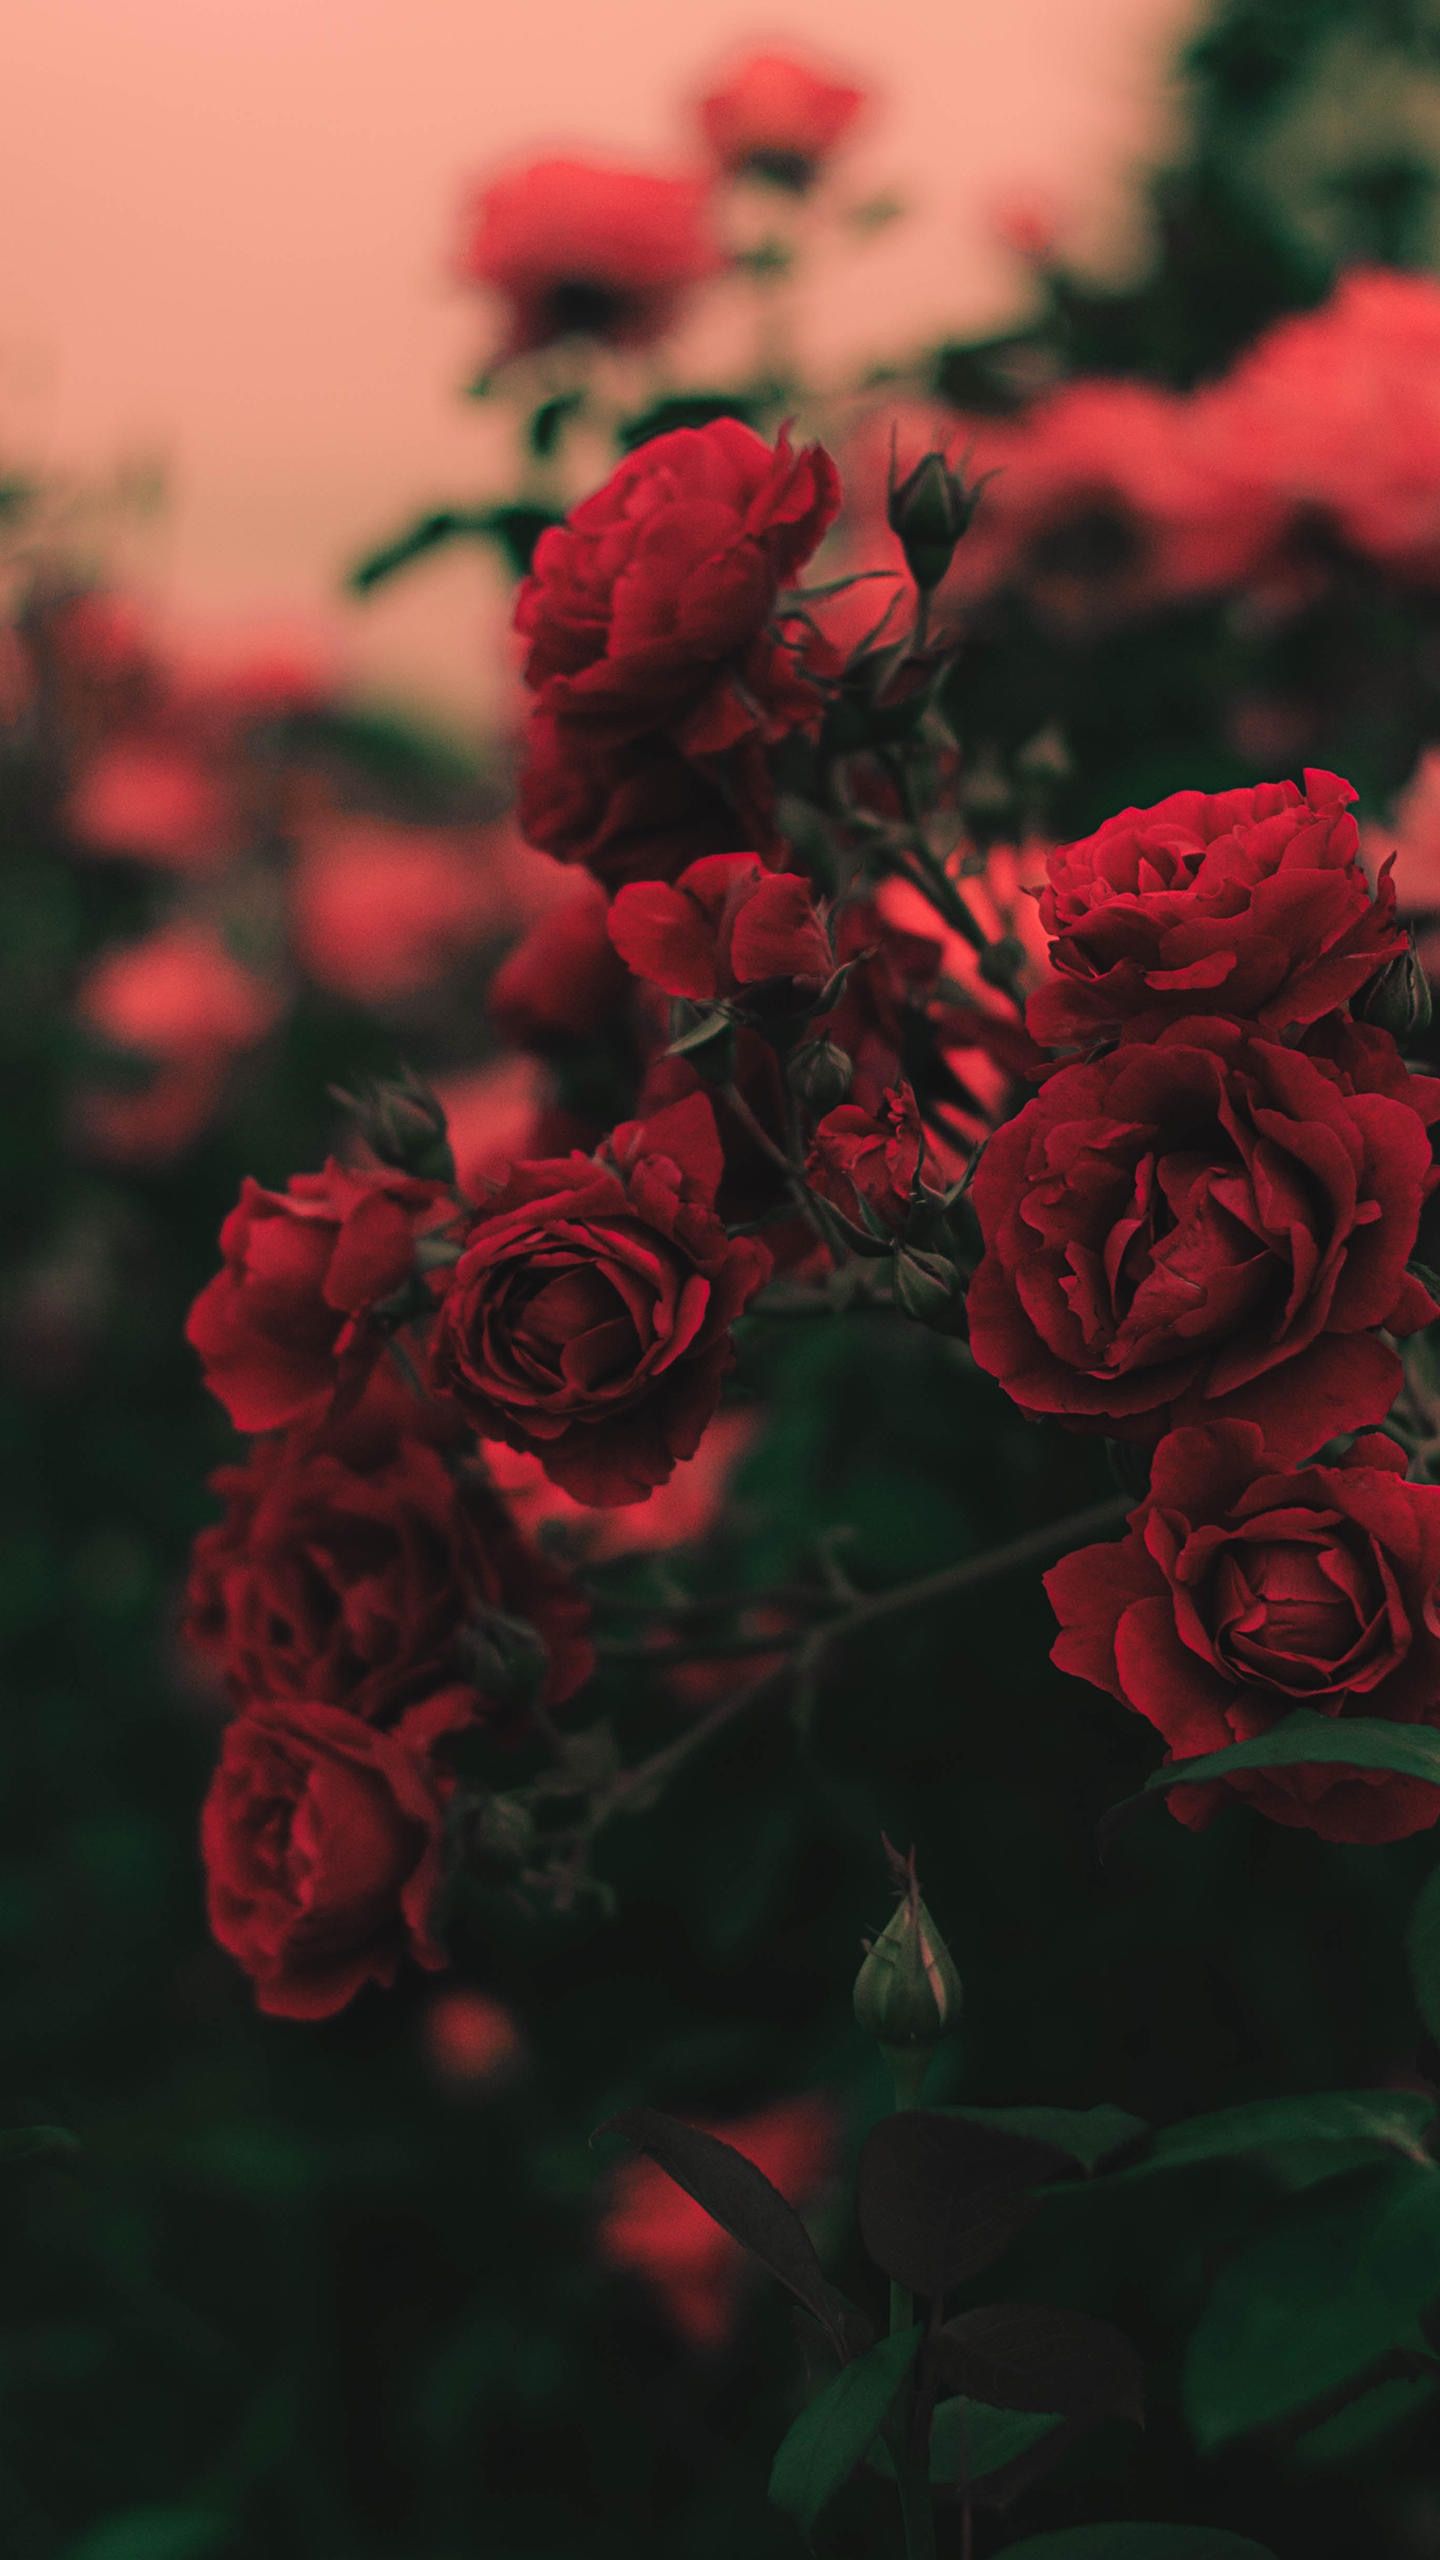 liebe ist wie rosentapete,blume,blühende pflanze,rot,gartenrosen,rose